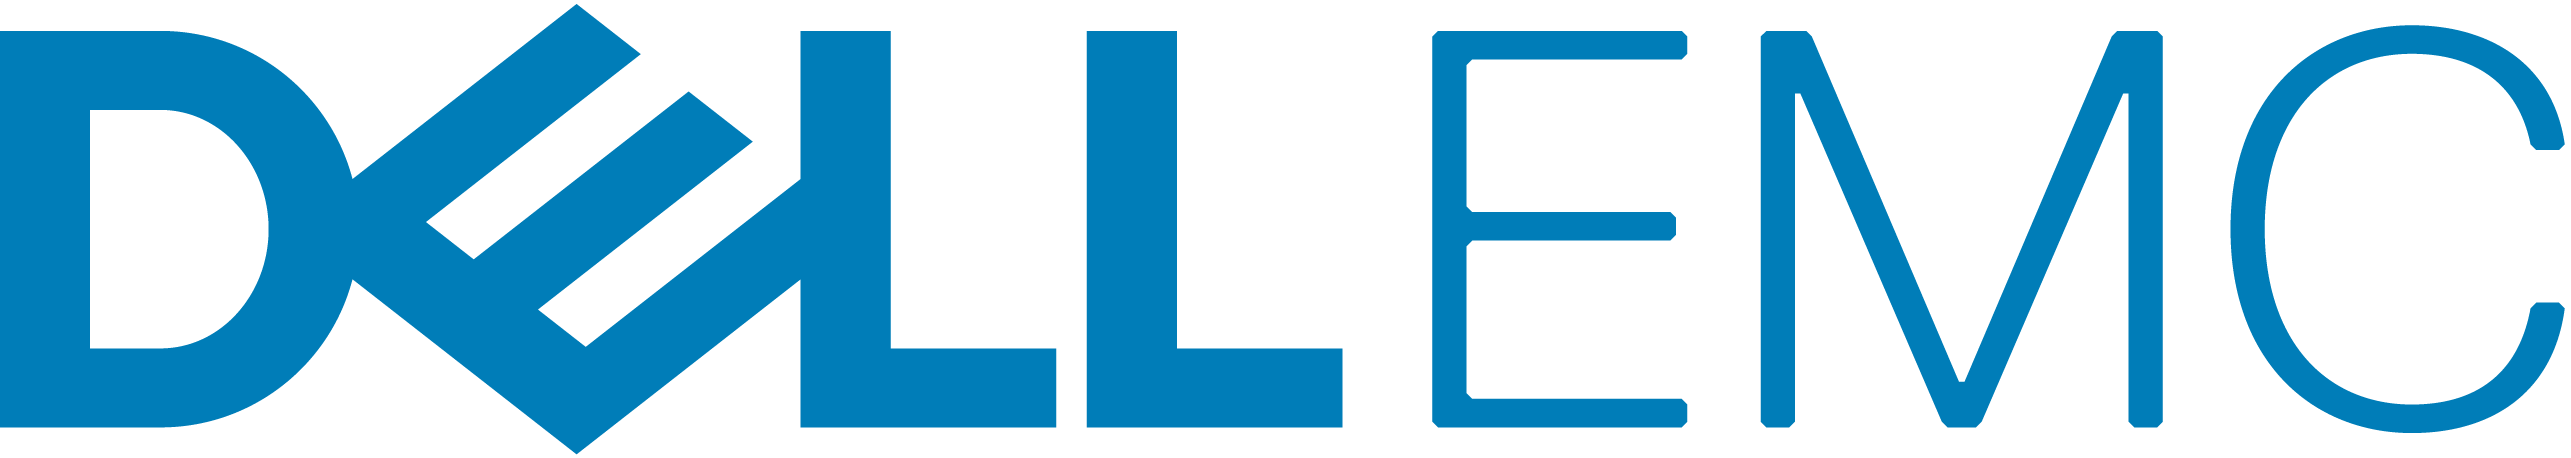 EMC Partner Logo - Dell EMC Partner & Reseller | Softcat